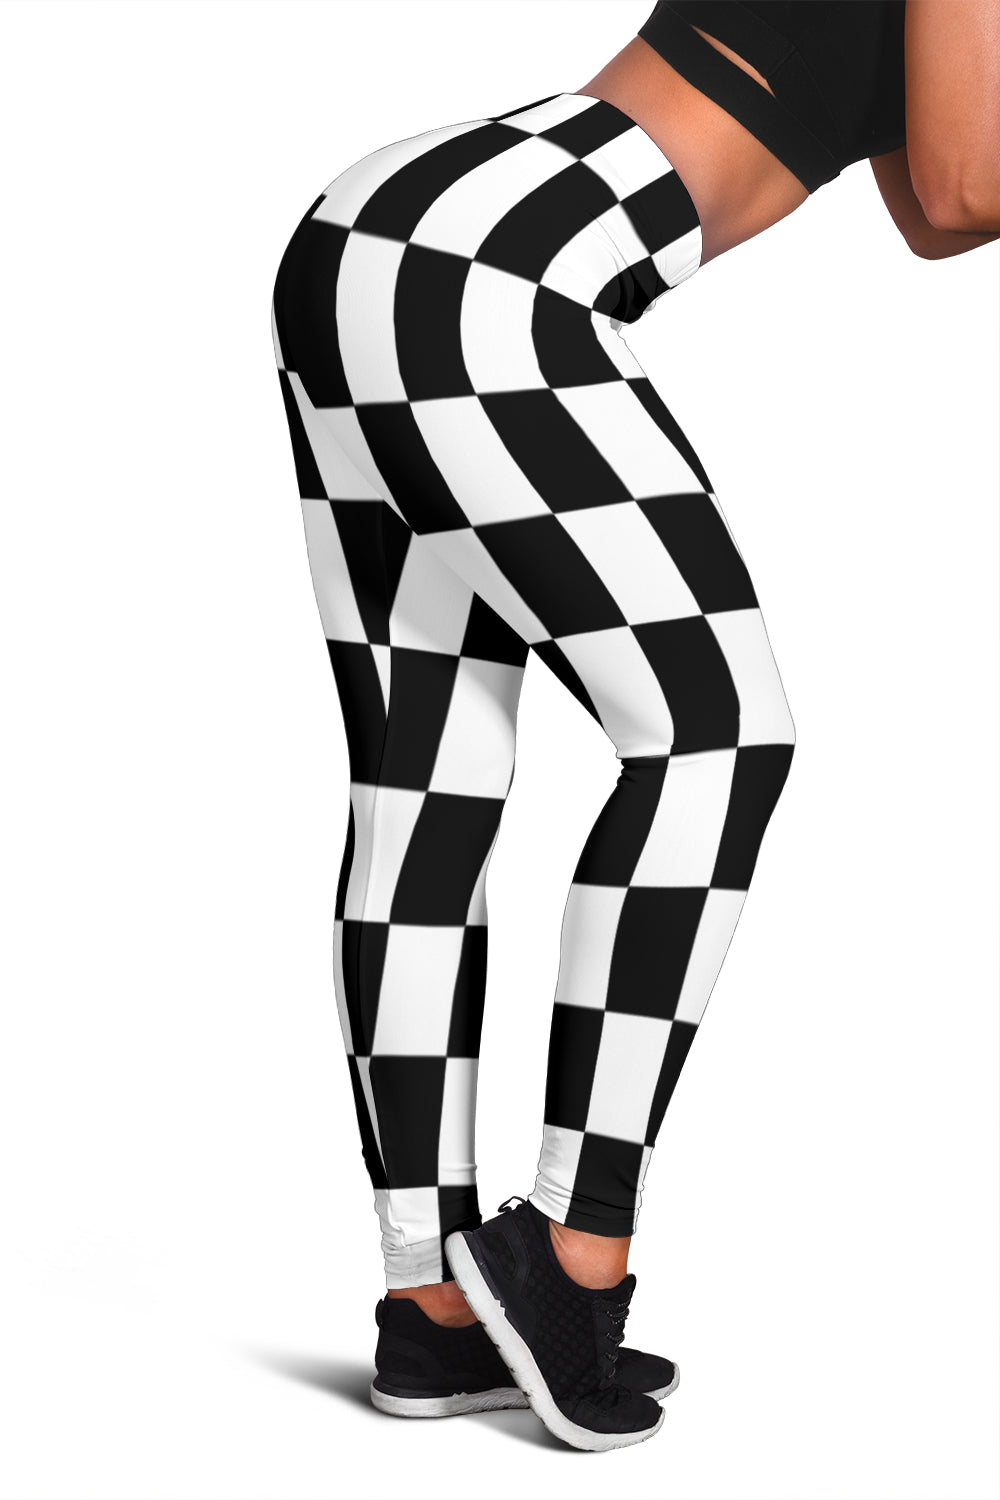 Racing Checkered Leggings